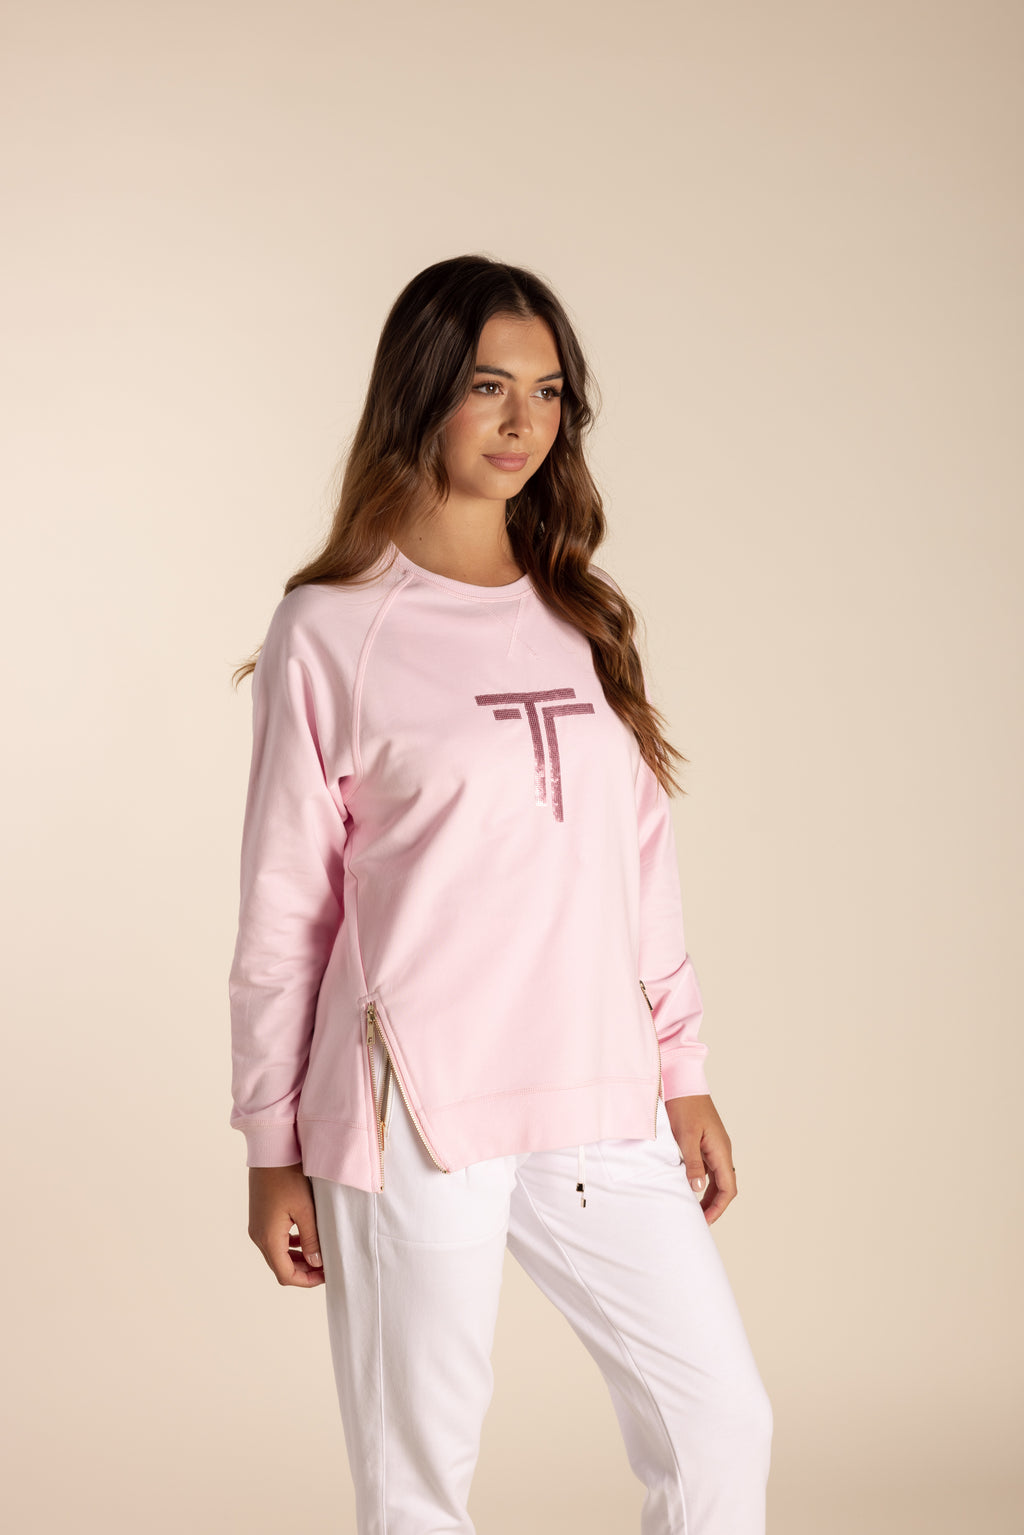 Two Ts logo sweater pink